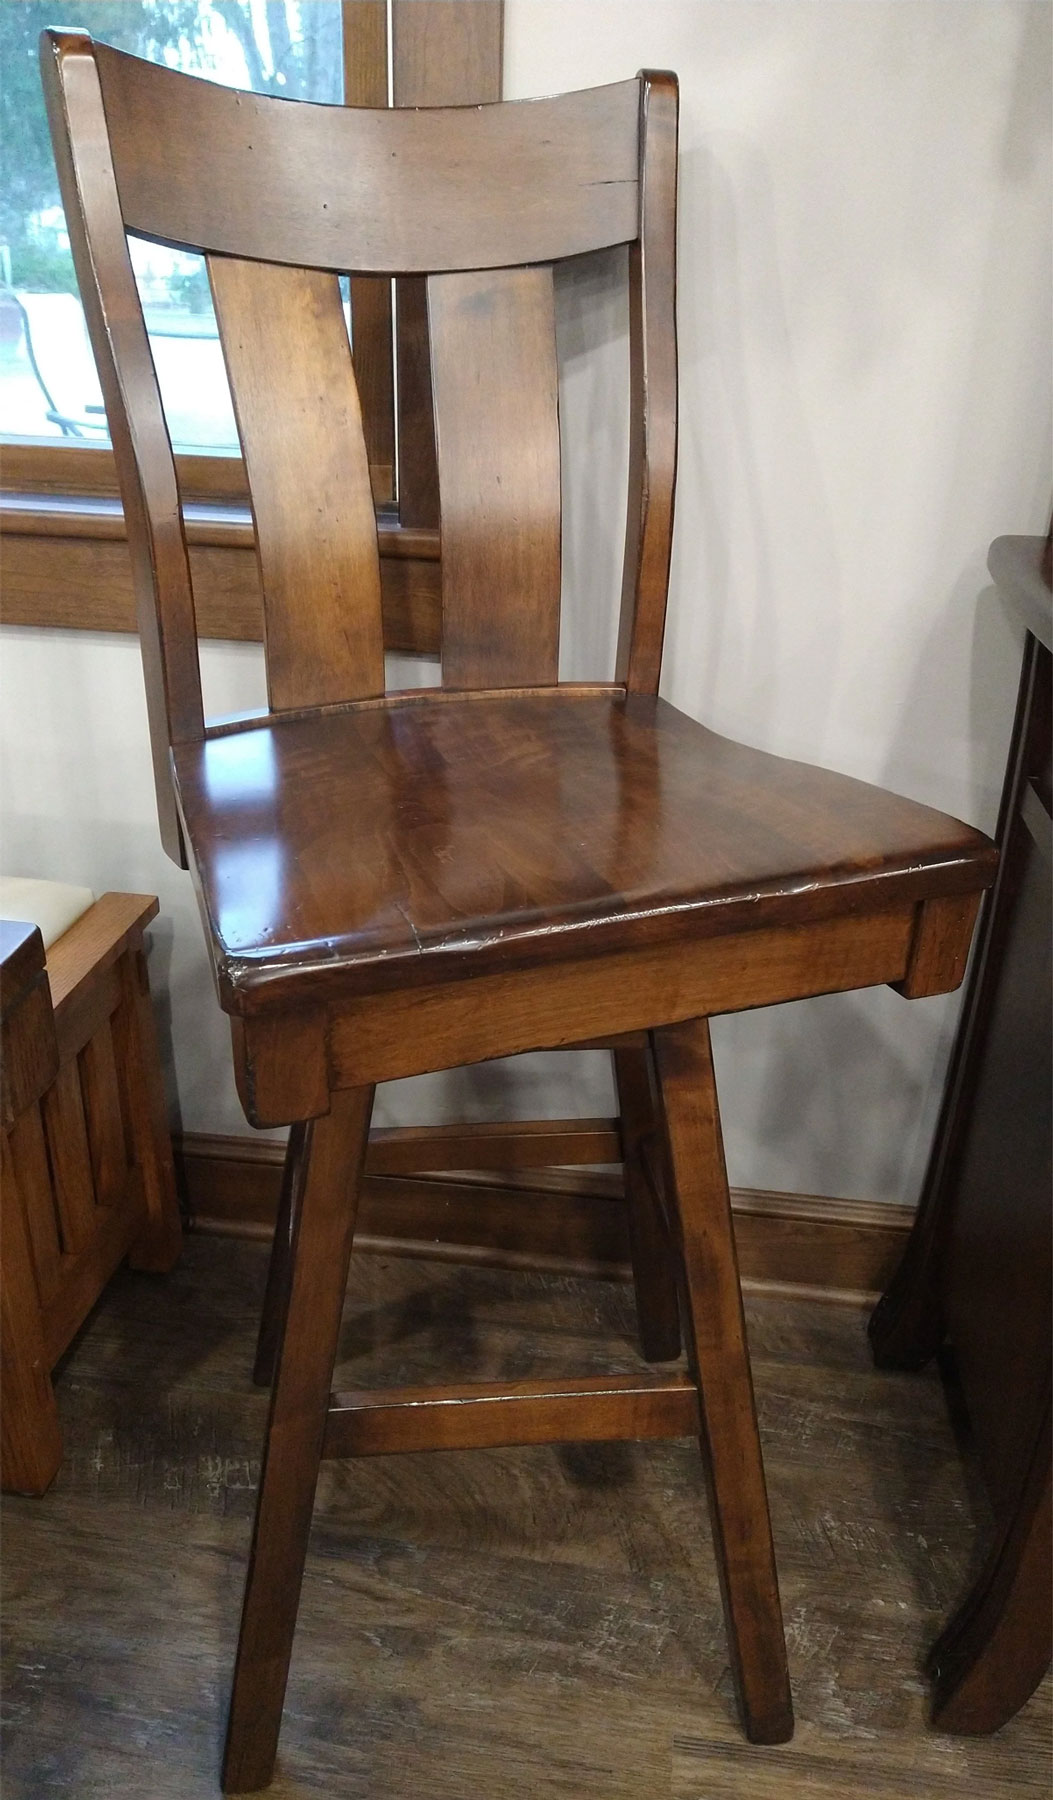 Richfield 30 inch Swivel Bar Chair in Brown Maple